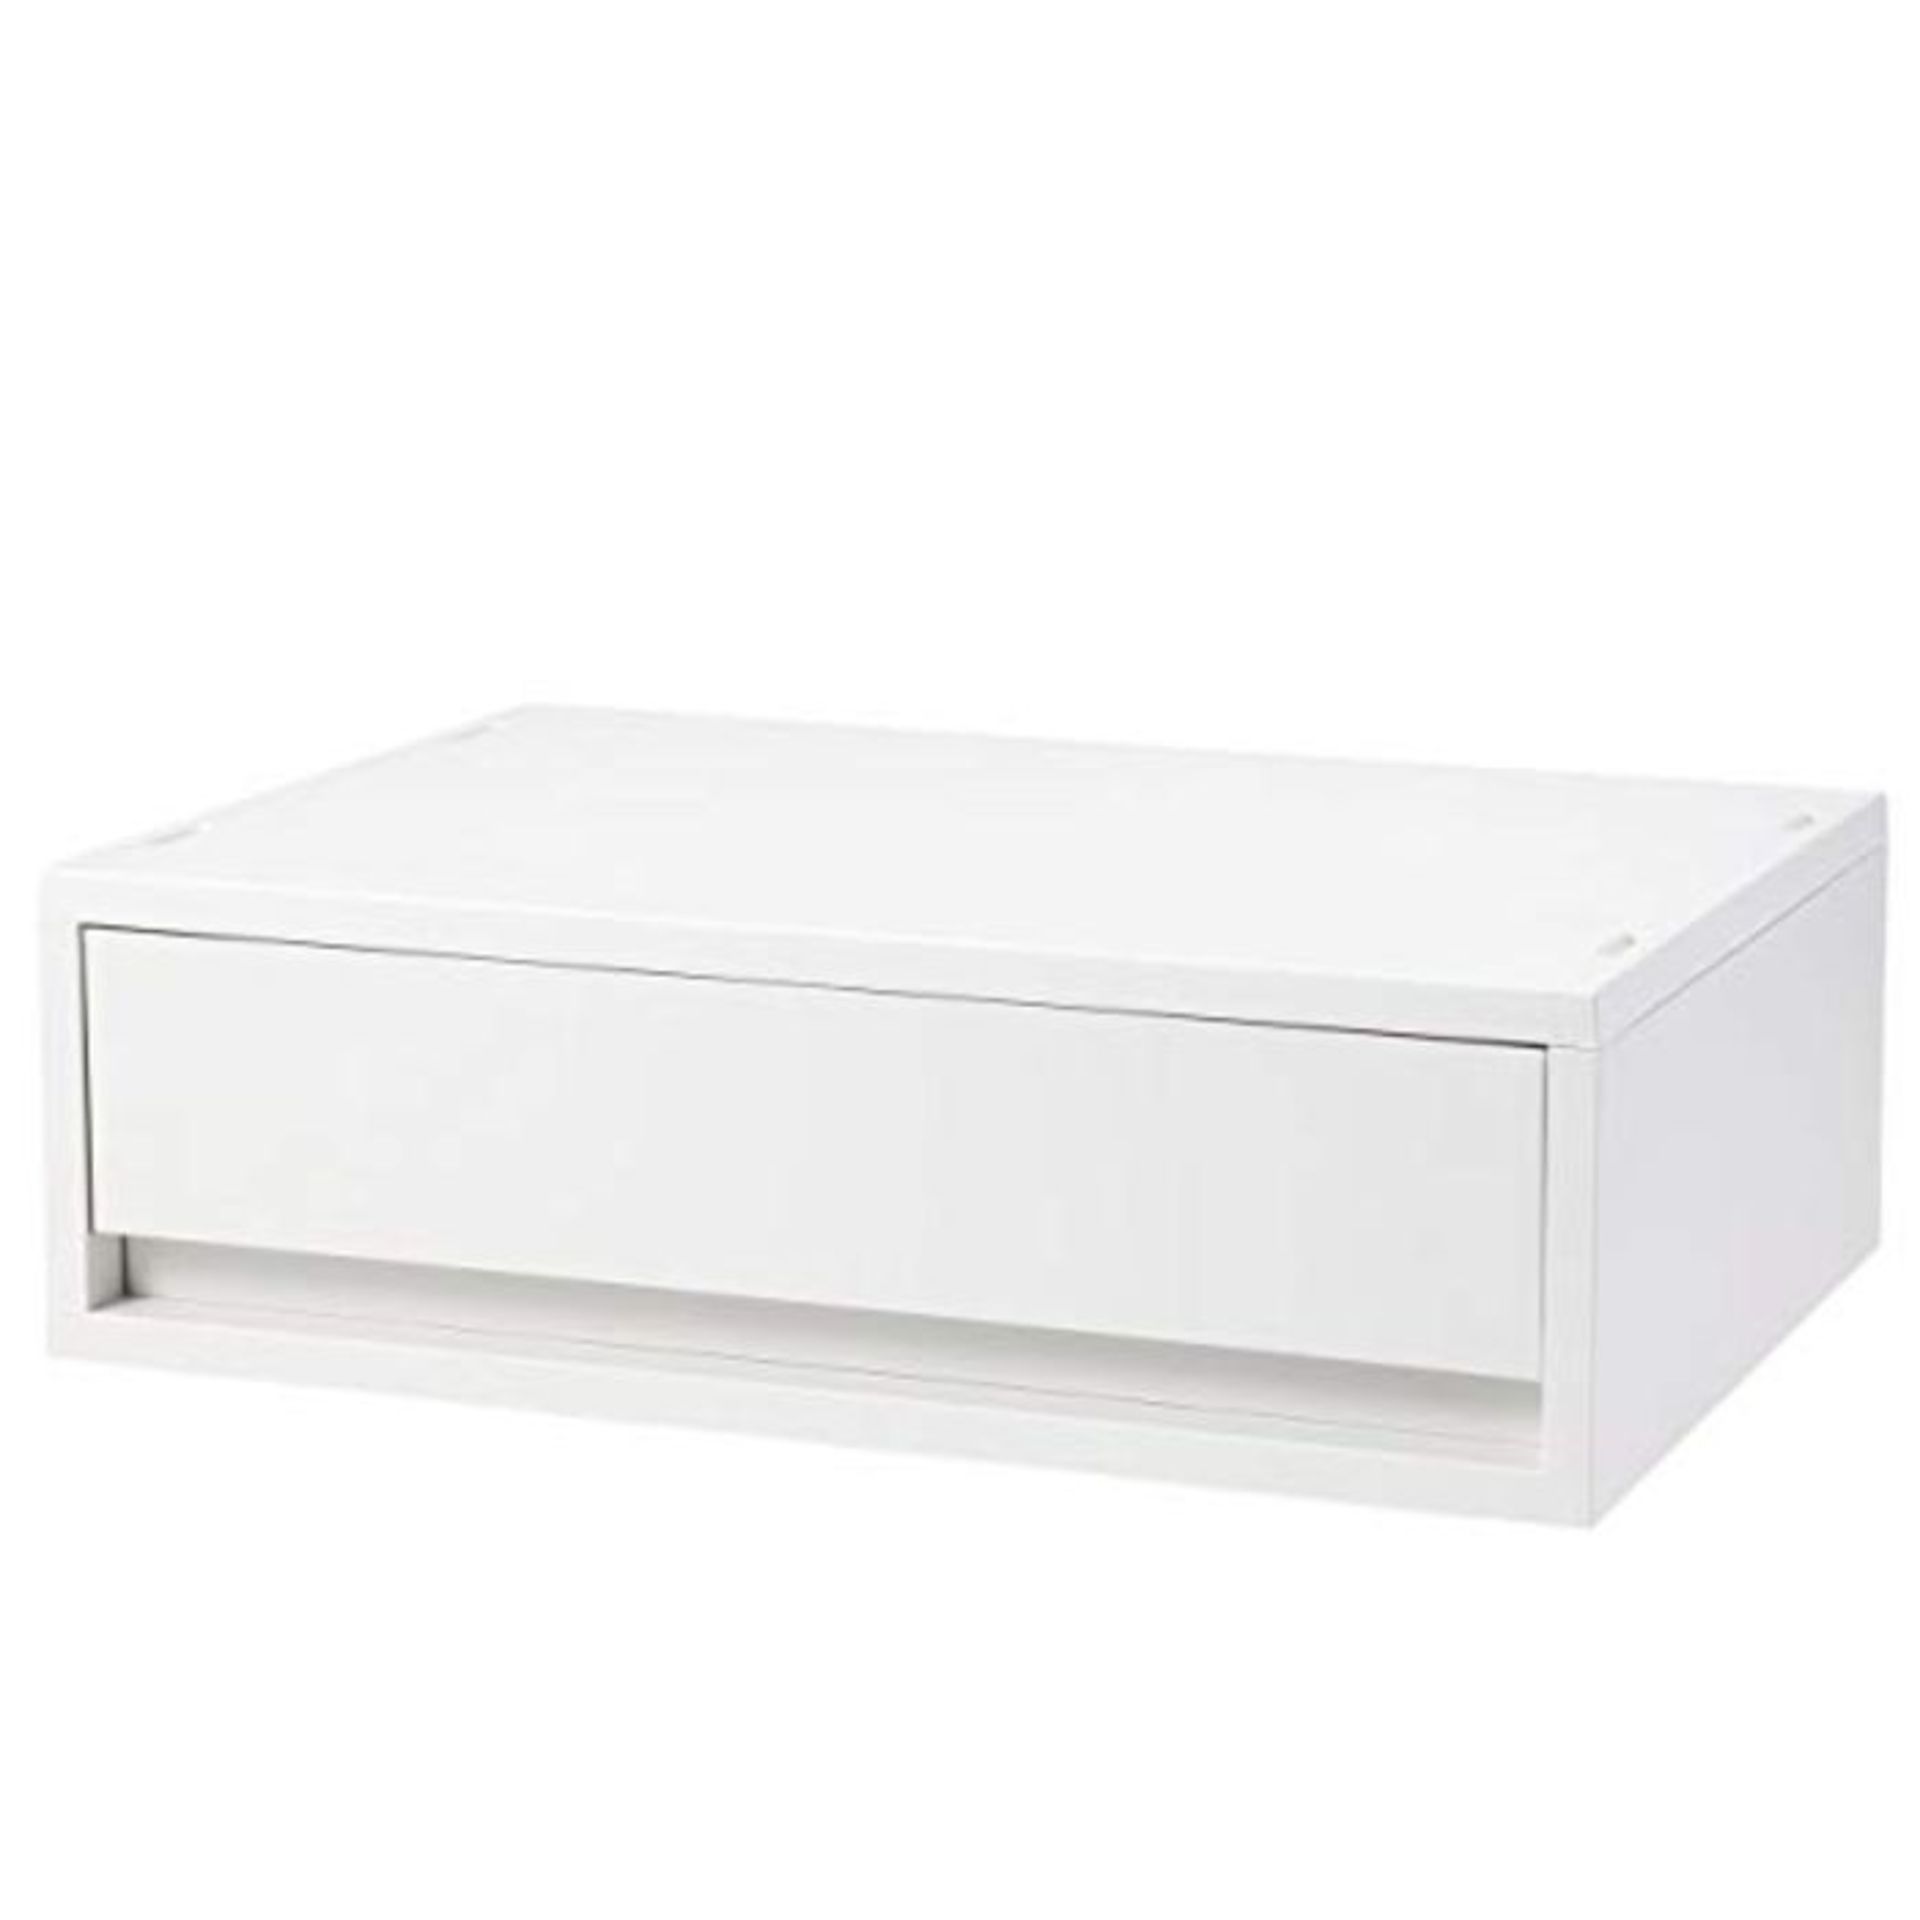 [INCOMPLETE] Muji Polypropylene Drawer Storage Box, A4 Wide, 37 cm Width x 26 cm Depth